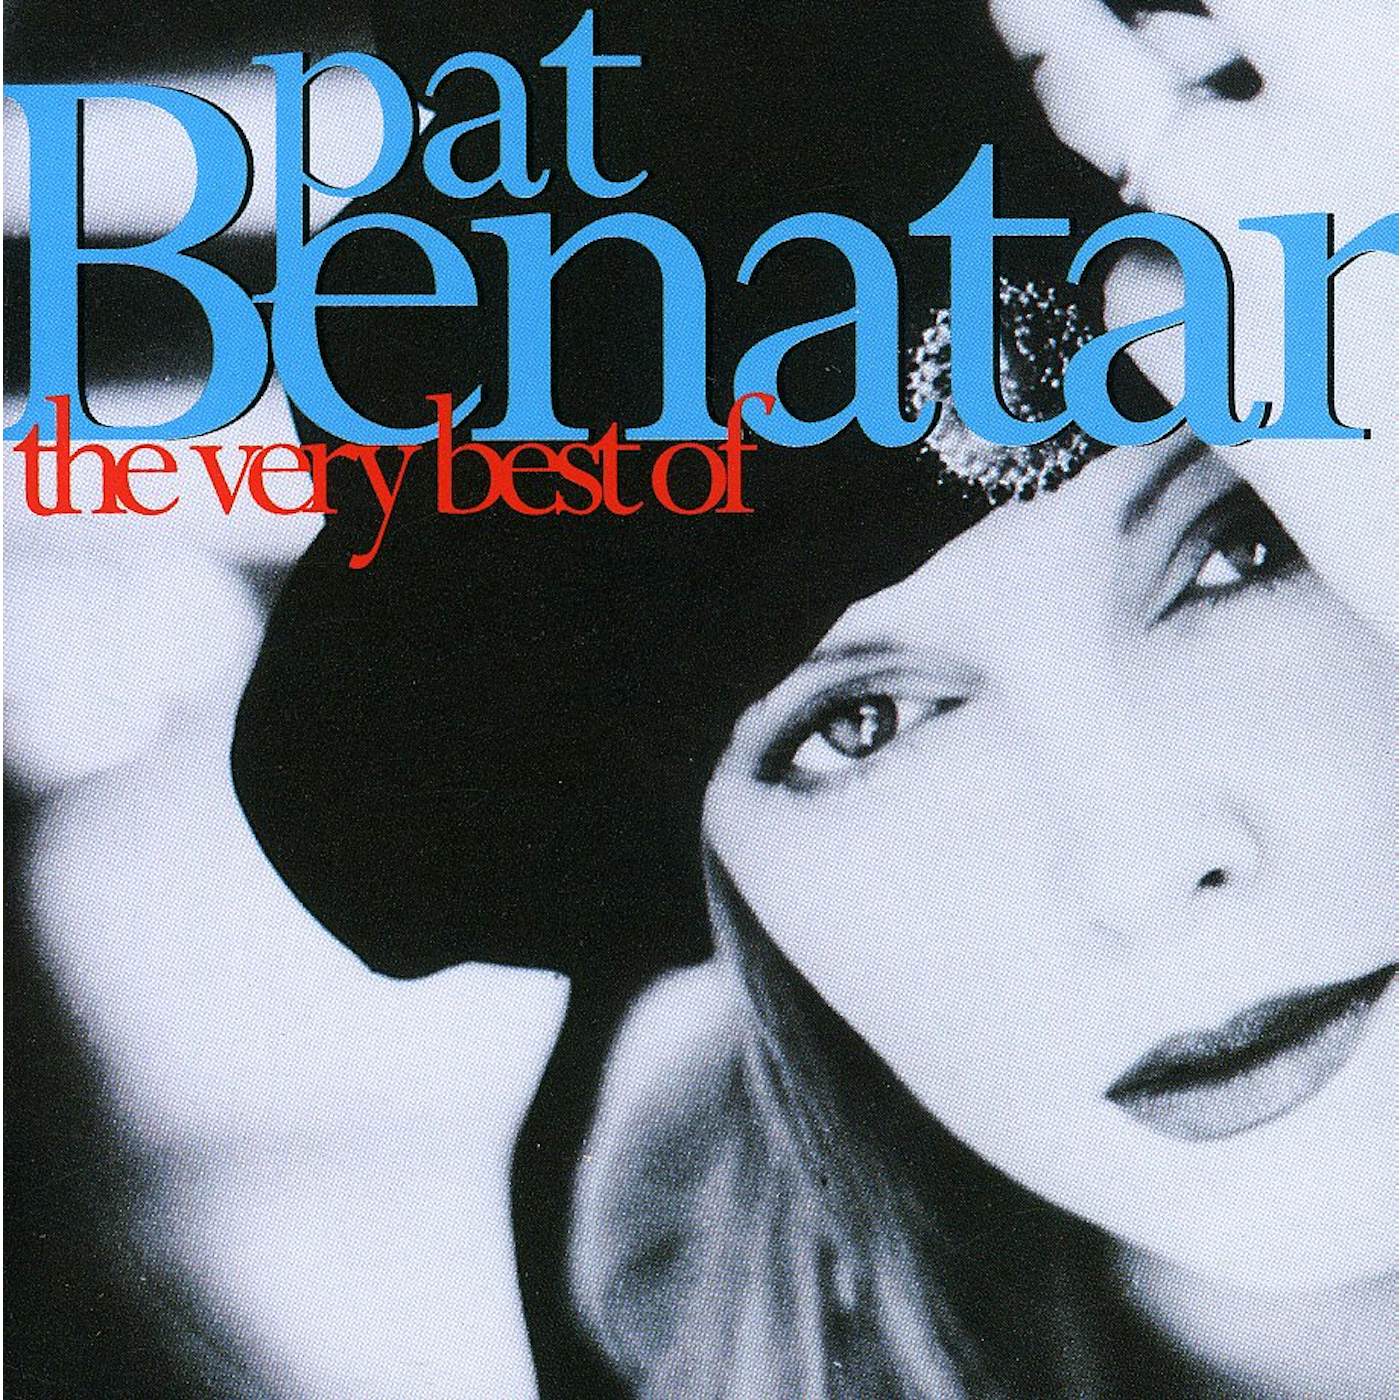 Pat Benatar VERY BEST OF CD